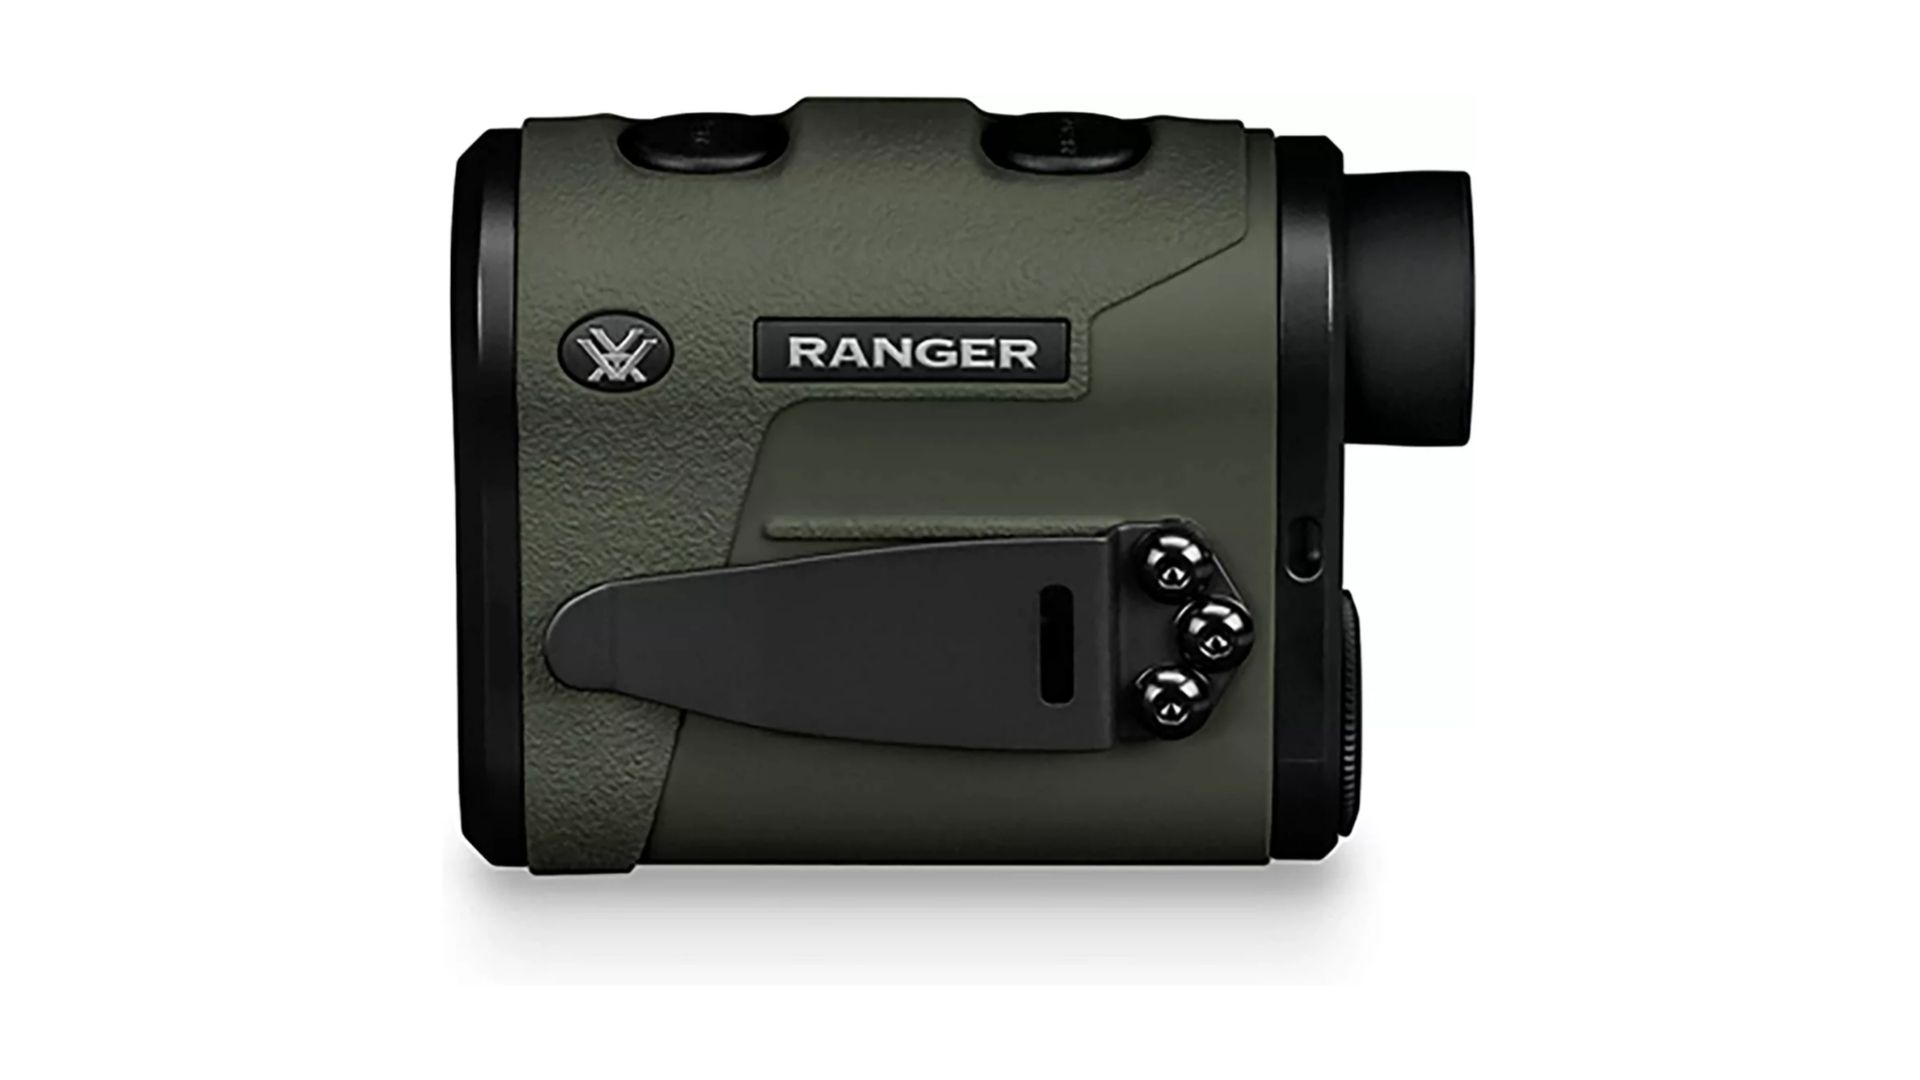 Best Rangefinders for Hunting of 2023